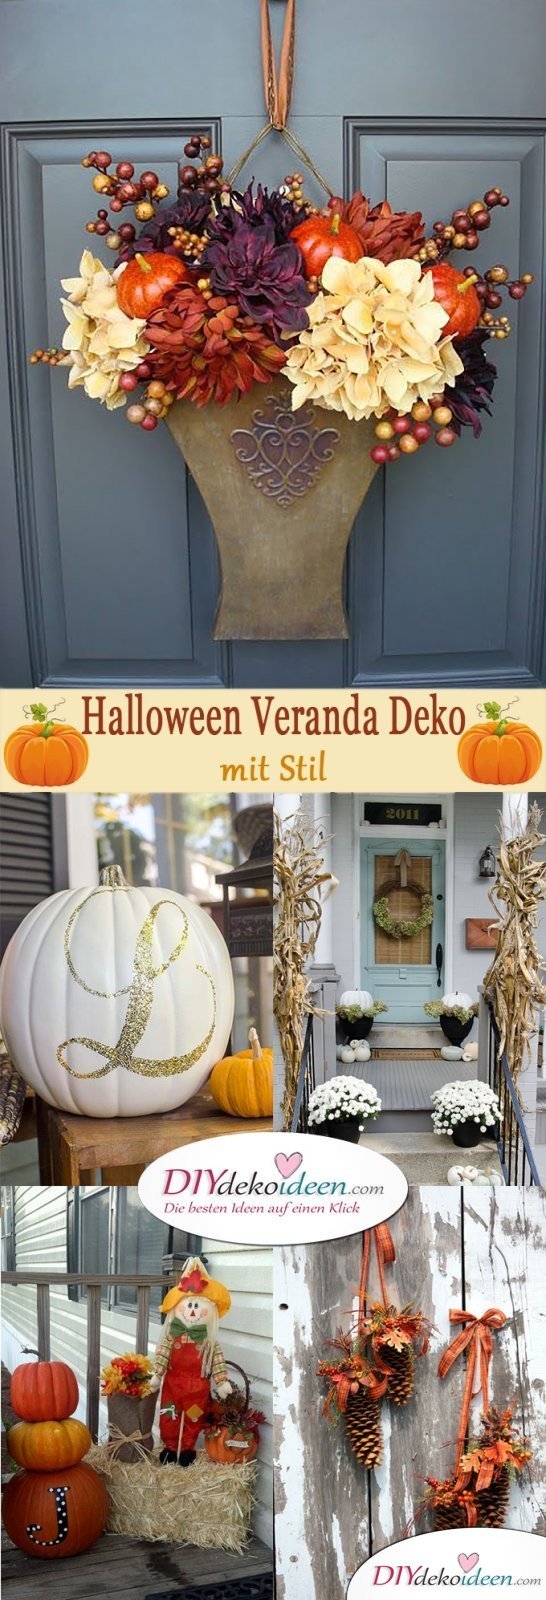 DIY Dekoideen - Halloween Veranda Deko mit Stil